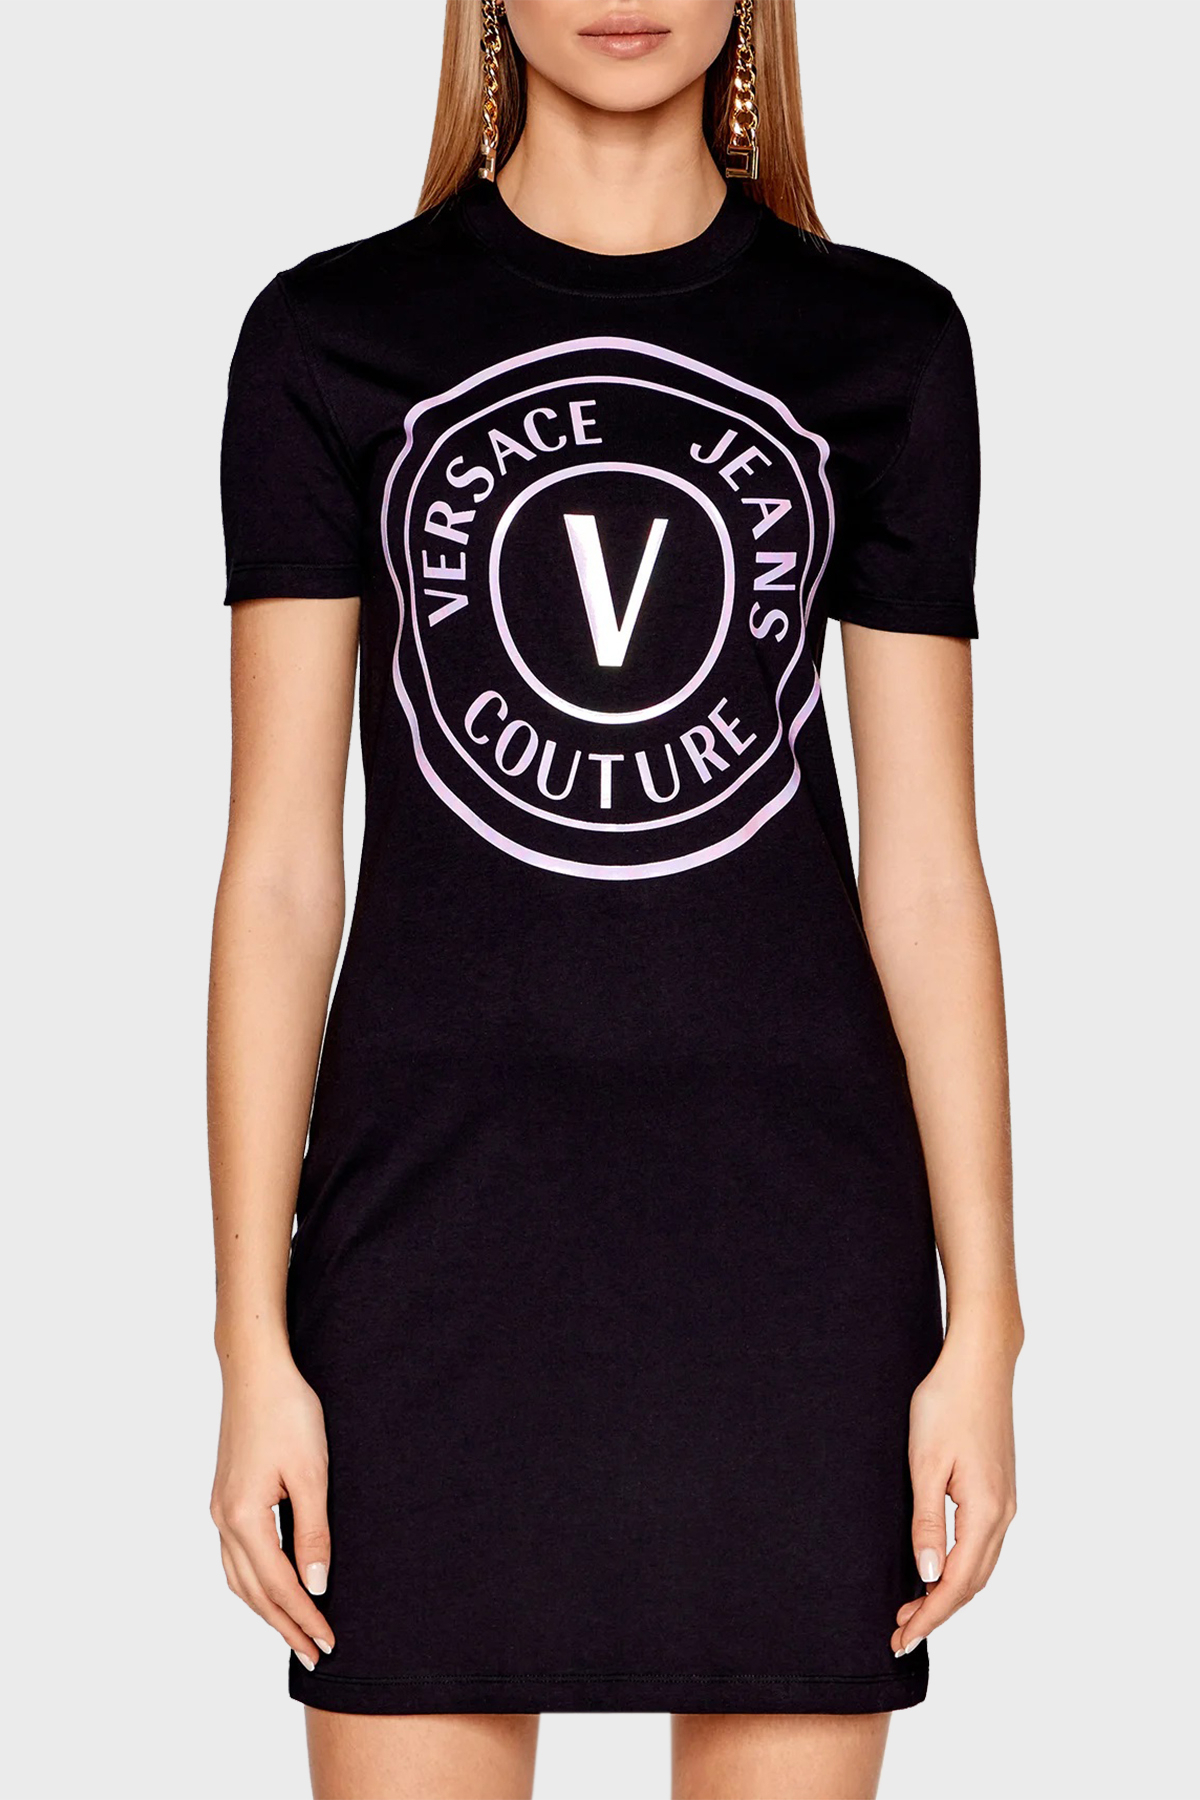 Versace Jeans Couture Logo Baskılı Bisiklet Yaka Dar Kesim Mini Bayan Elbise 72HAOP01 CJ01P OT6 SİYAH